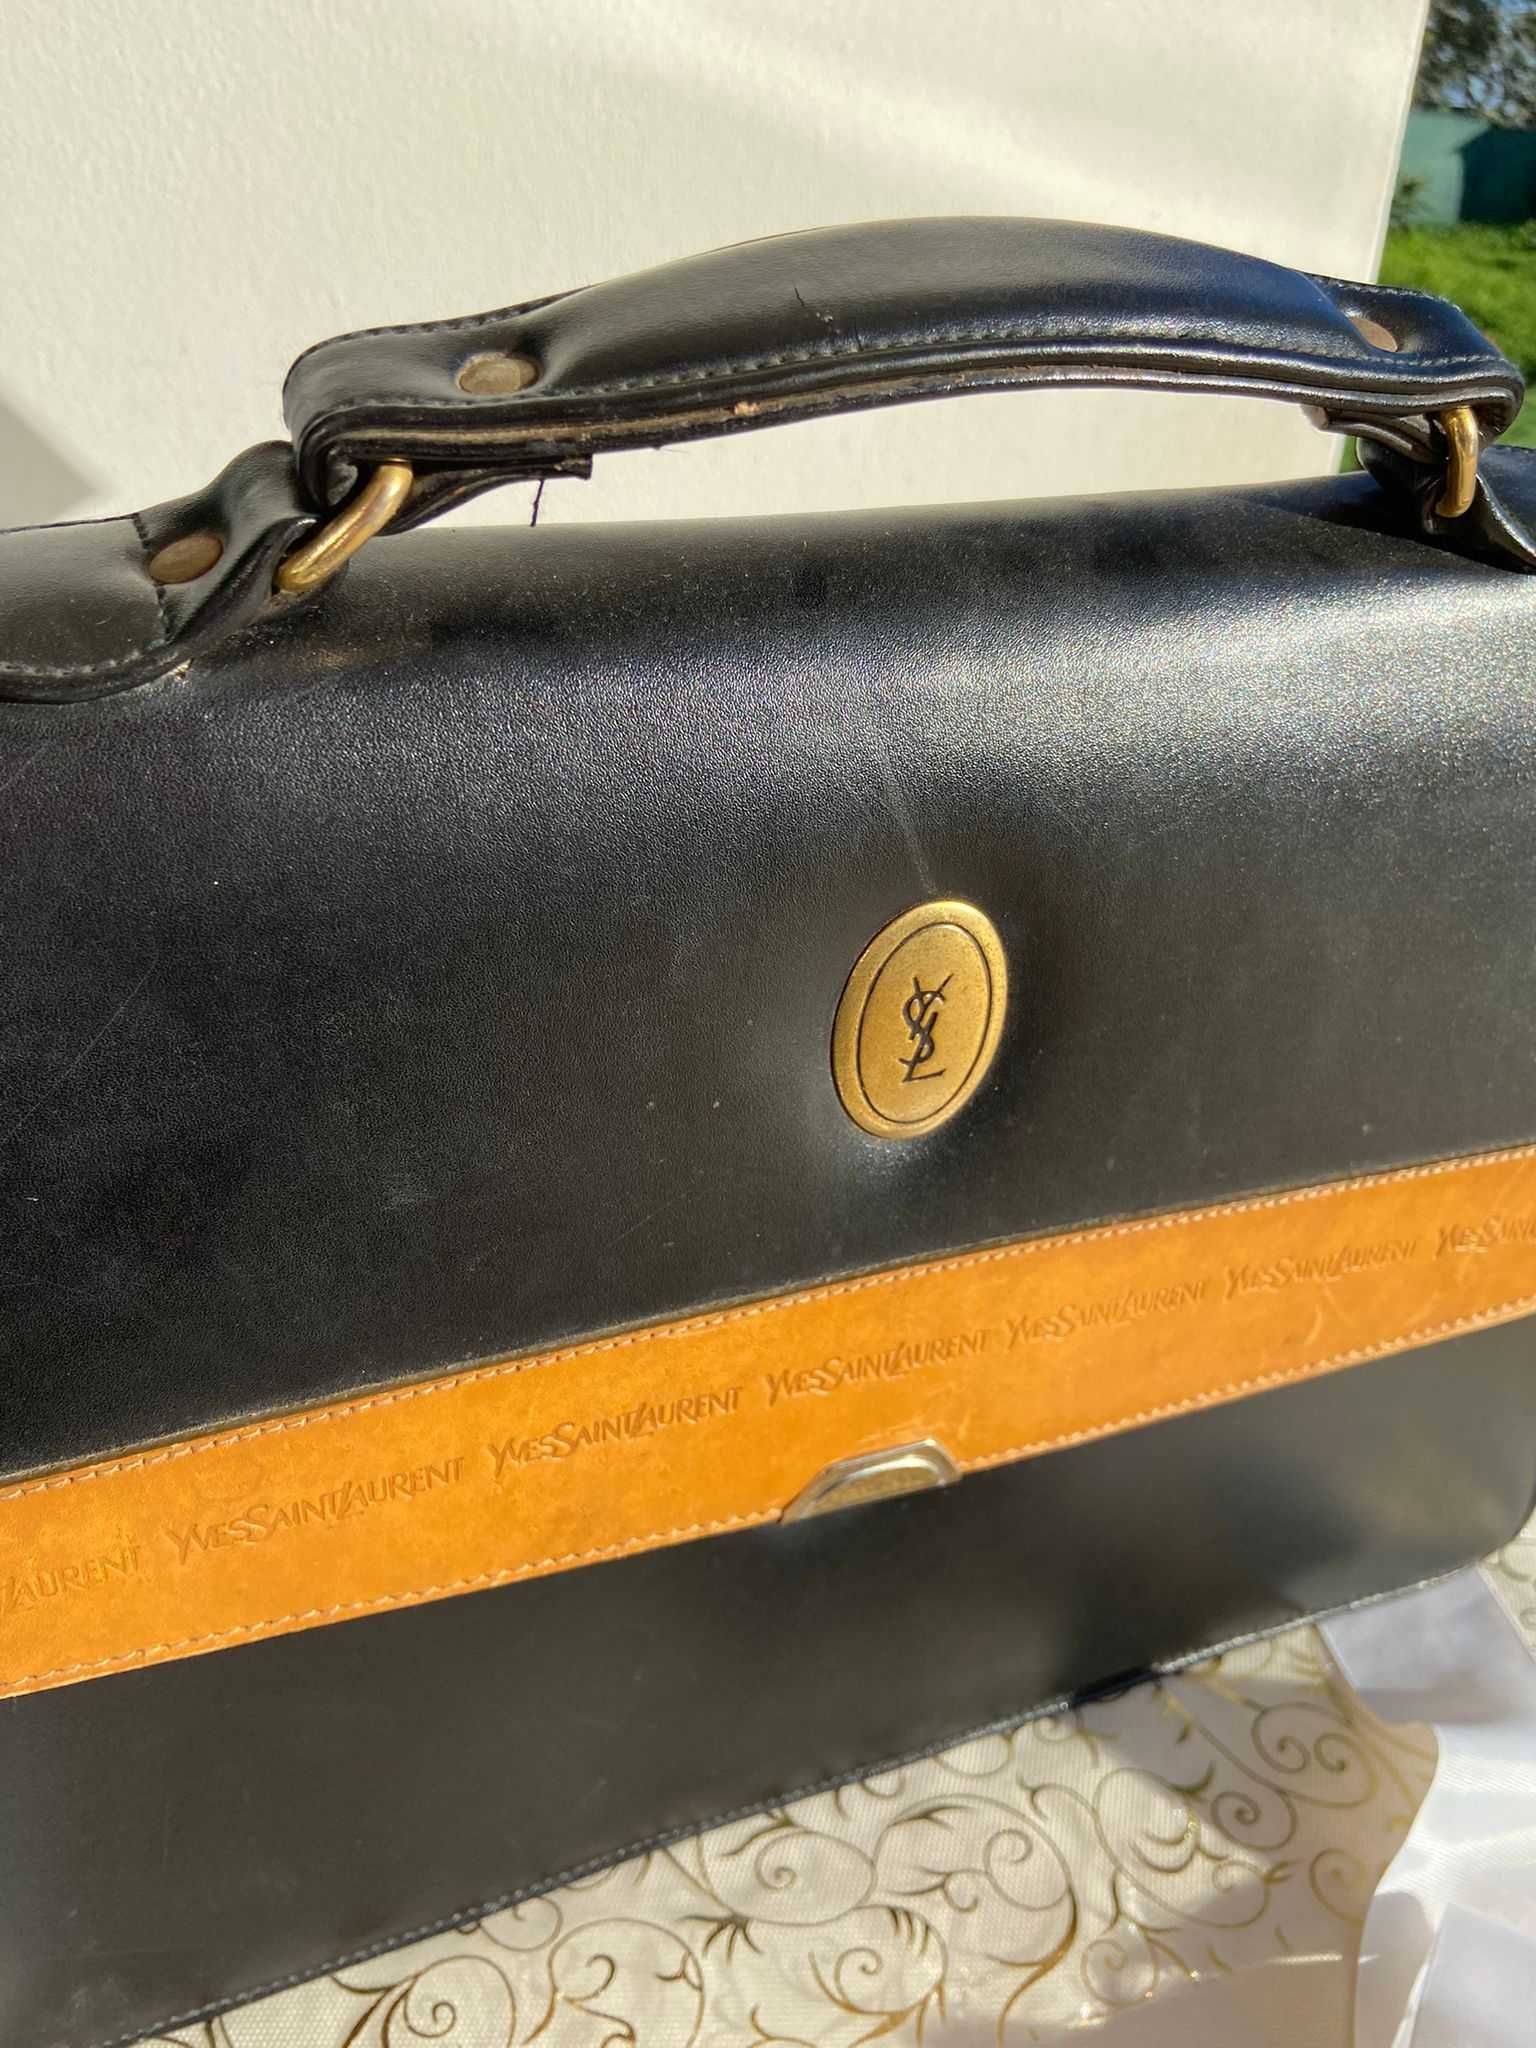 YSL vintage 70's laptop bag  / mala Yves Saint Laurent dos anos 70